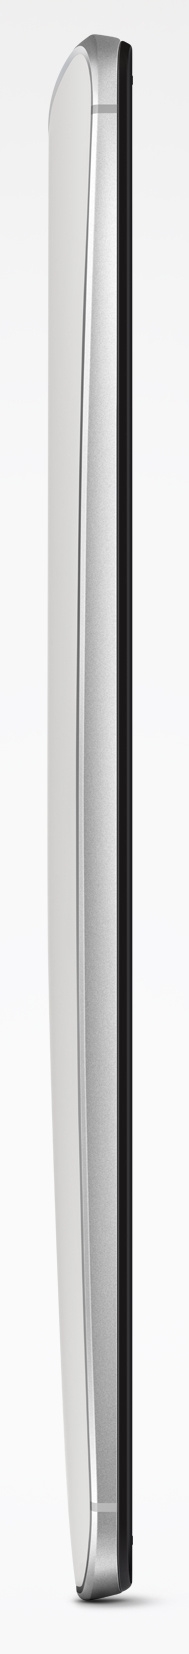 Nexus 6 64GB